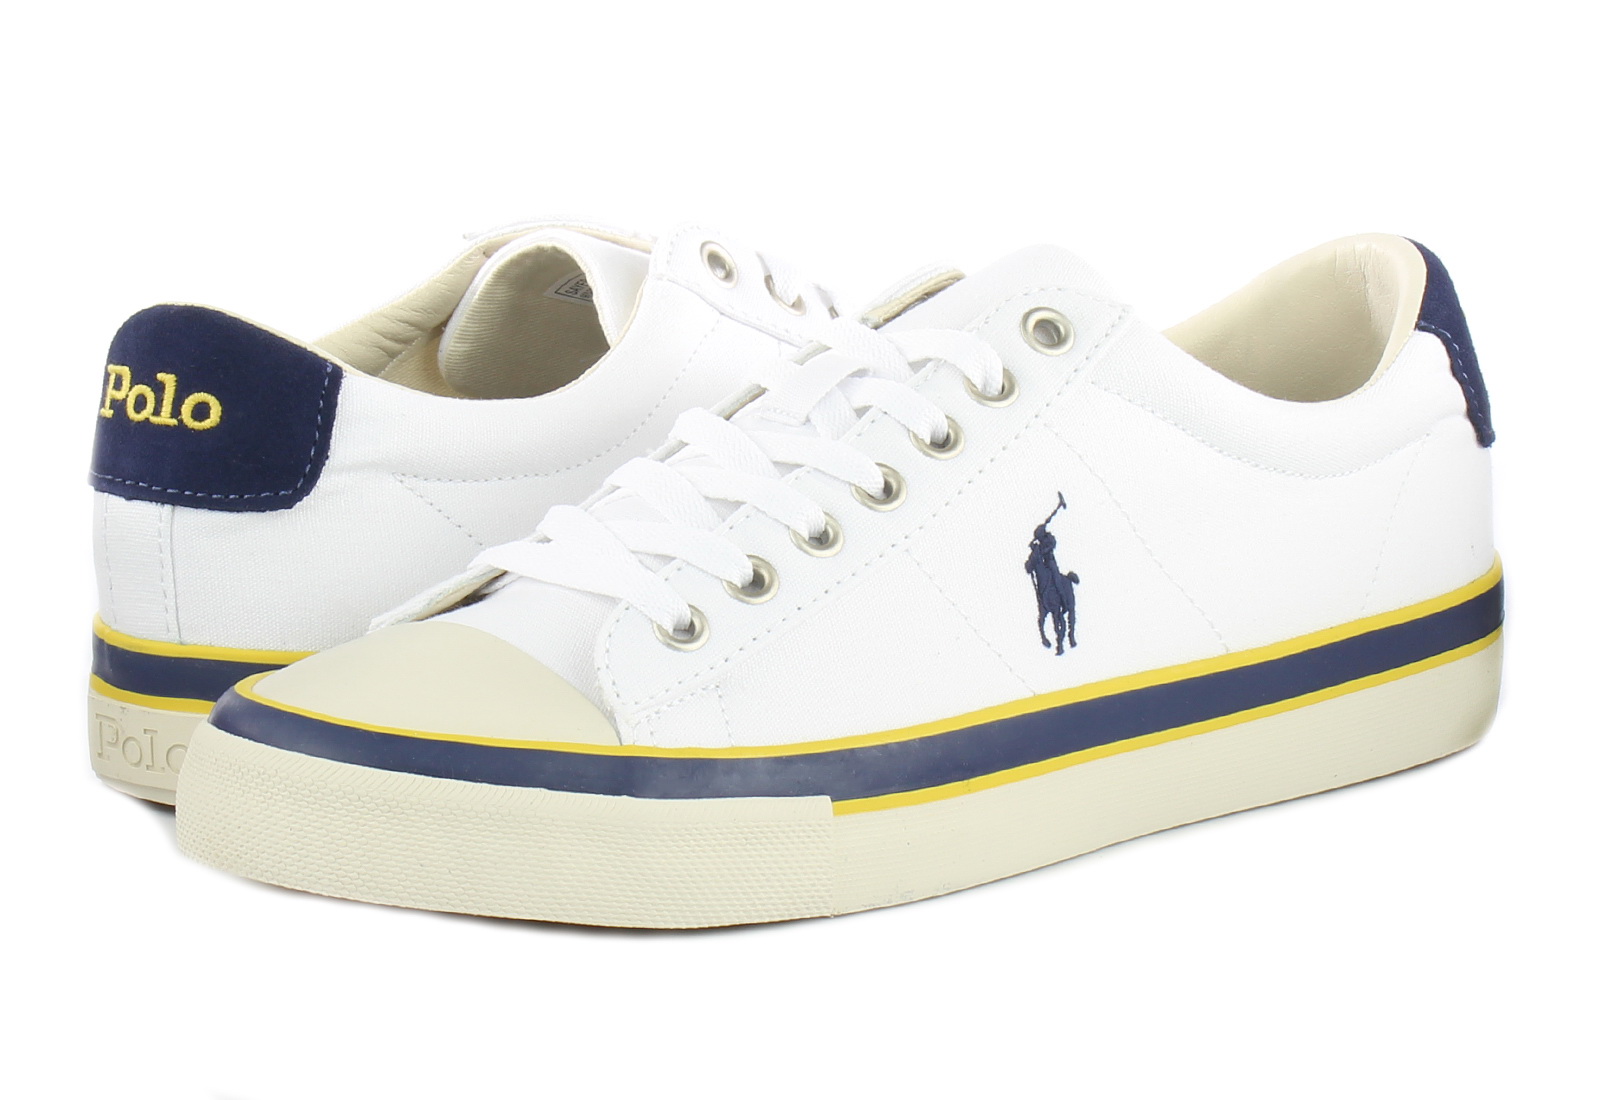 Polo Ralph Lauren Cipele Tenisice - Sayer - Office - Online trgovina obuće